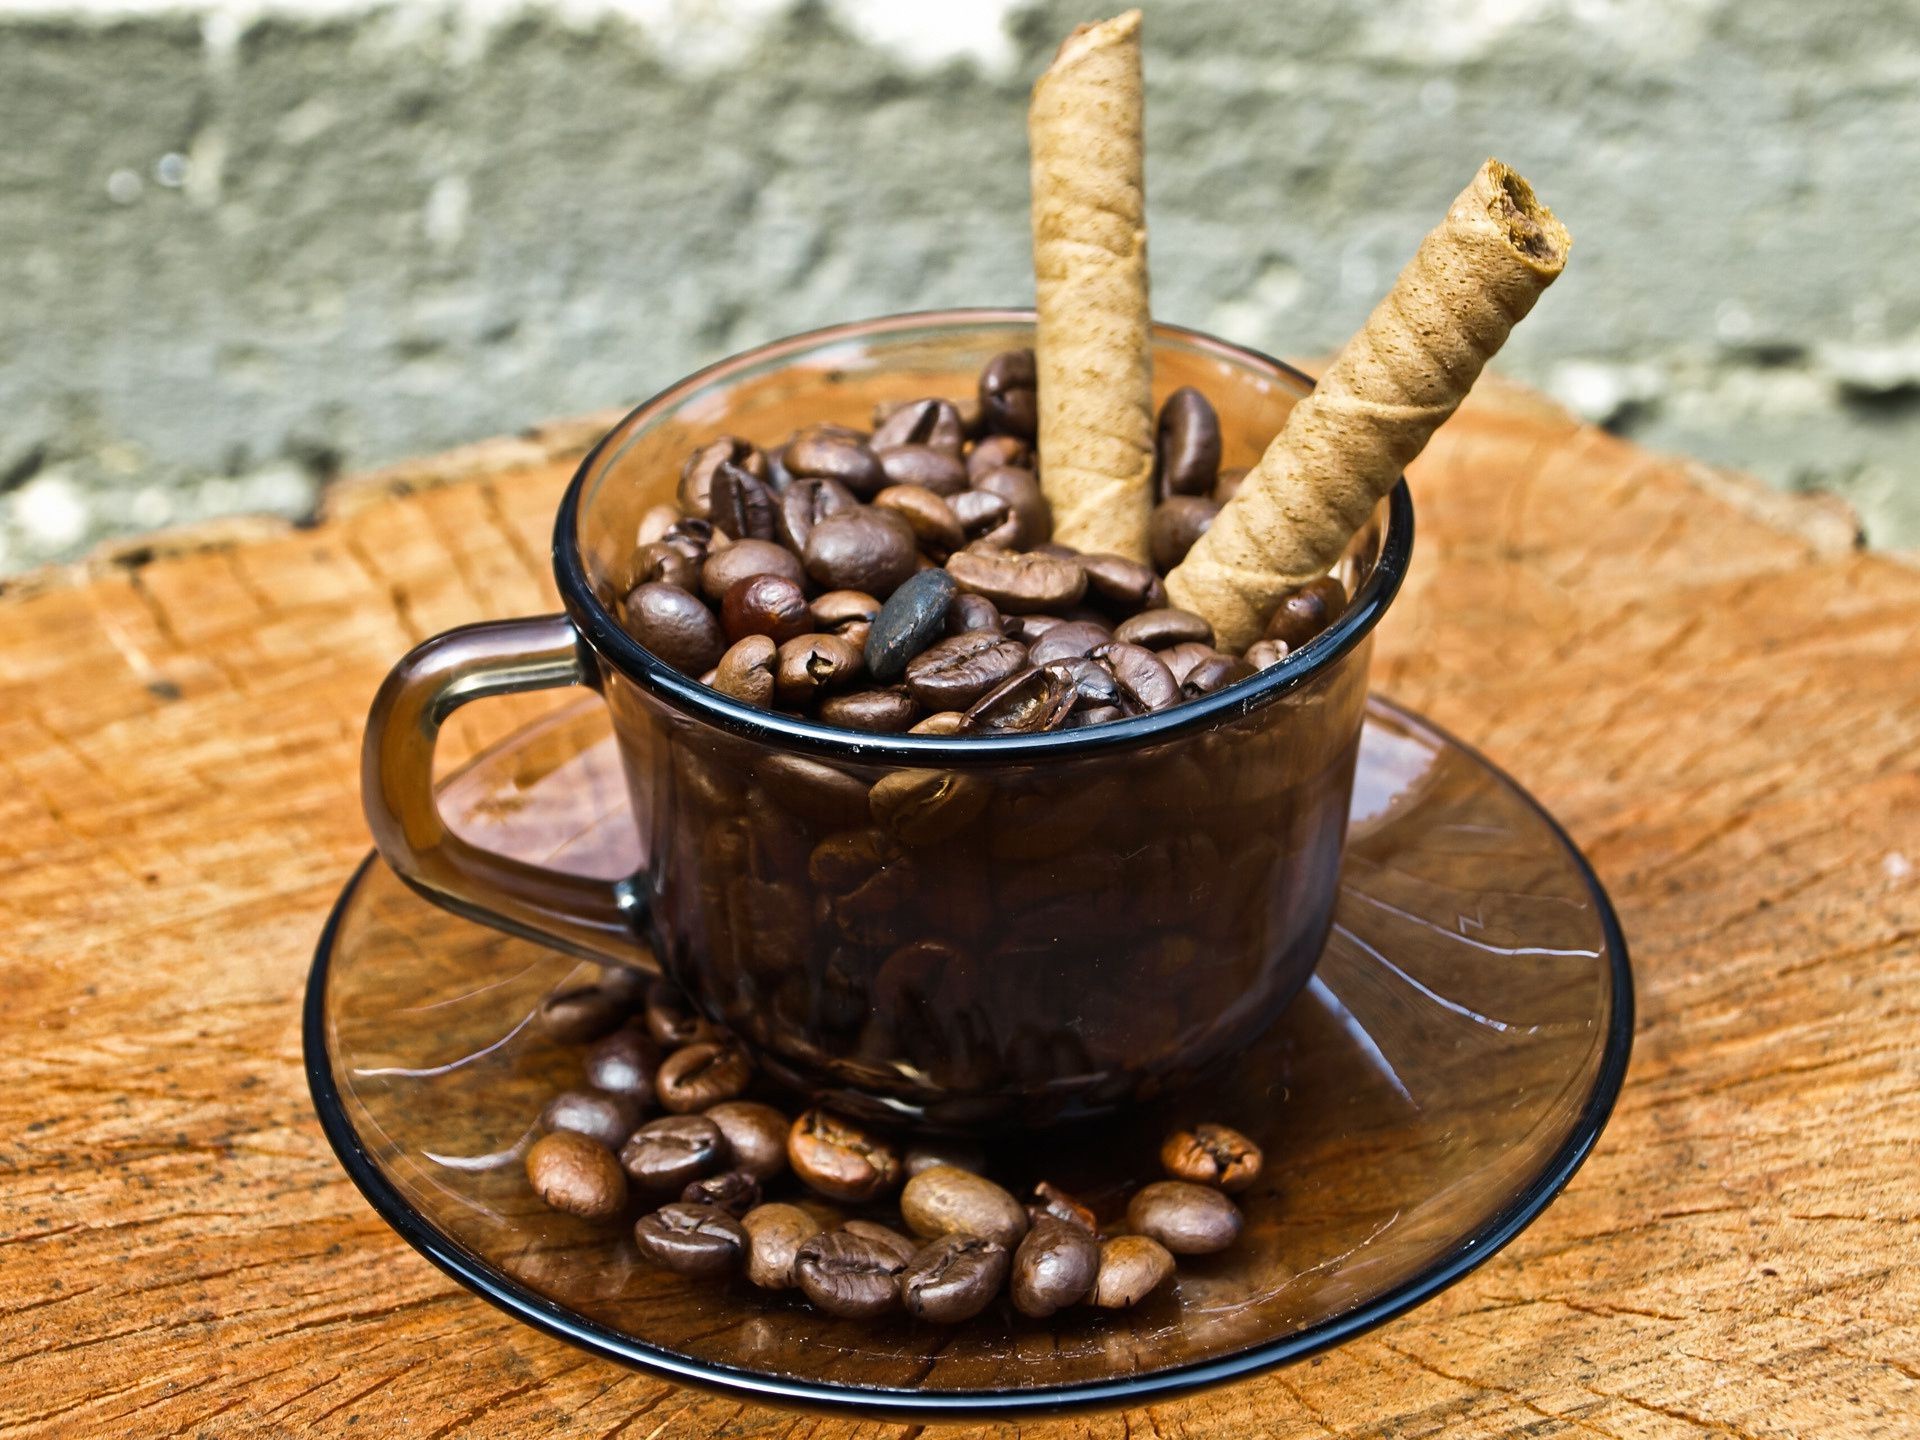 coffee cup caffeine drink espresso hot bean perfume breakfast food wood dark mug cappuccino dawn wooden rustic aromatic table